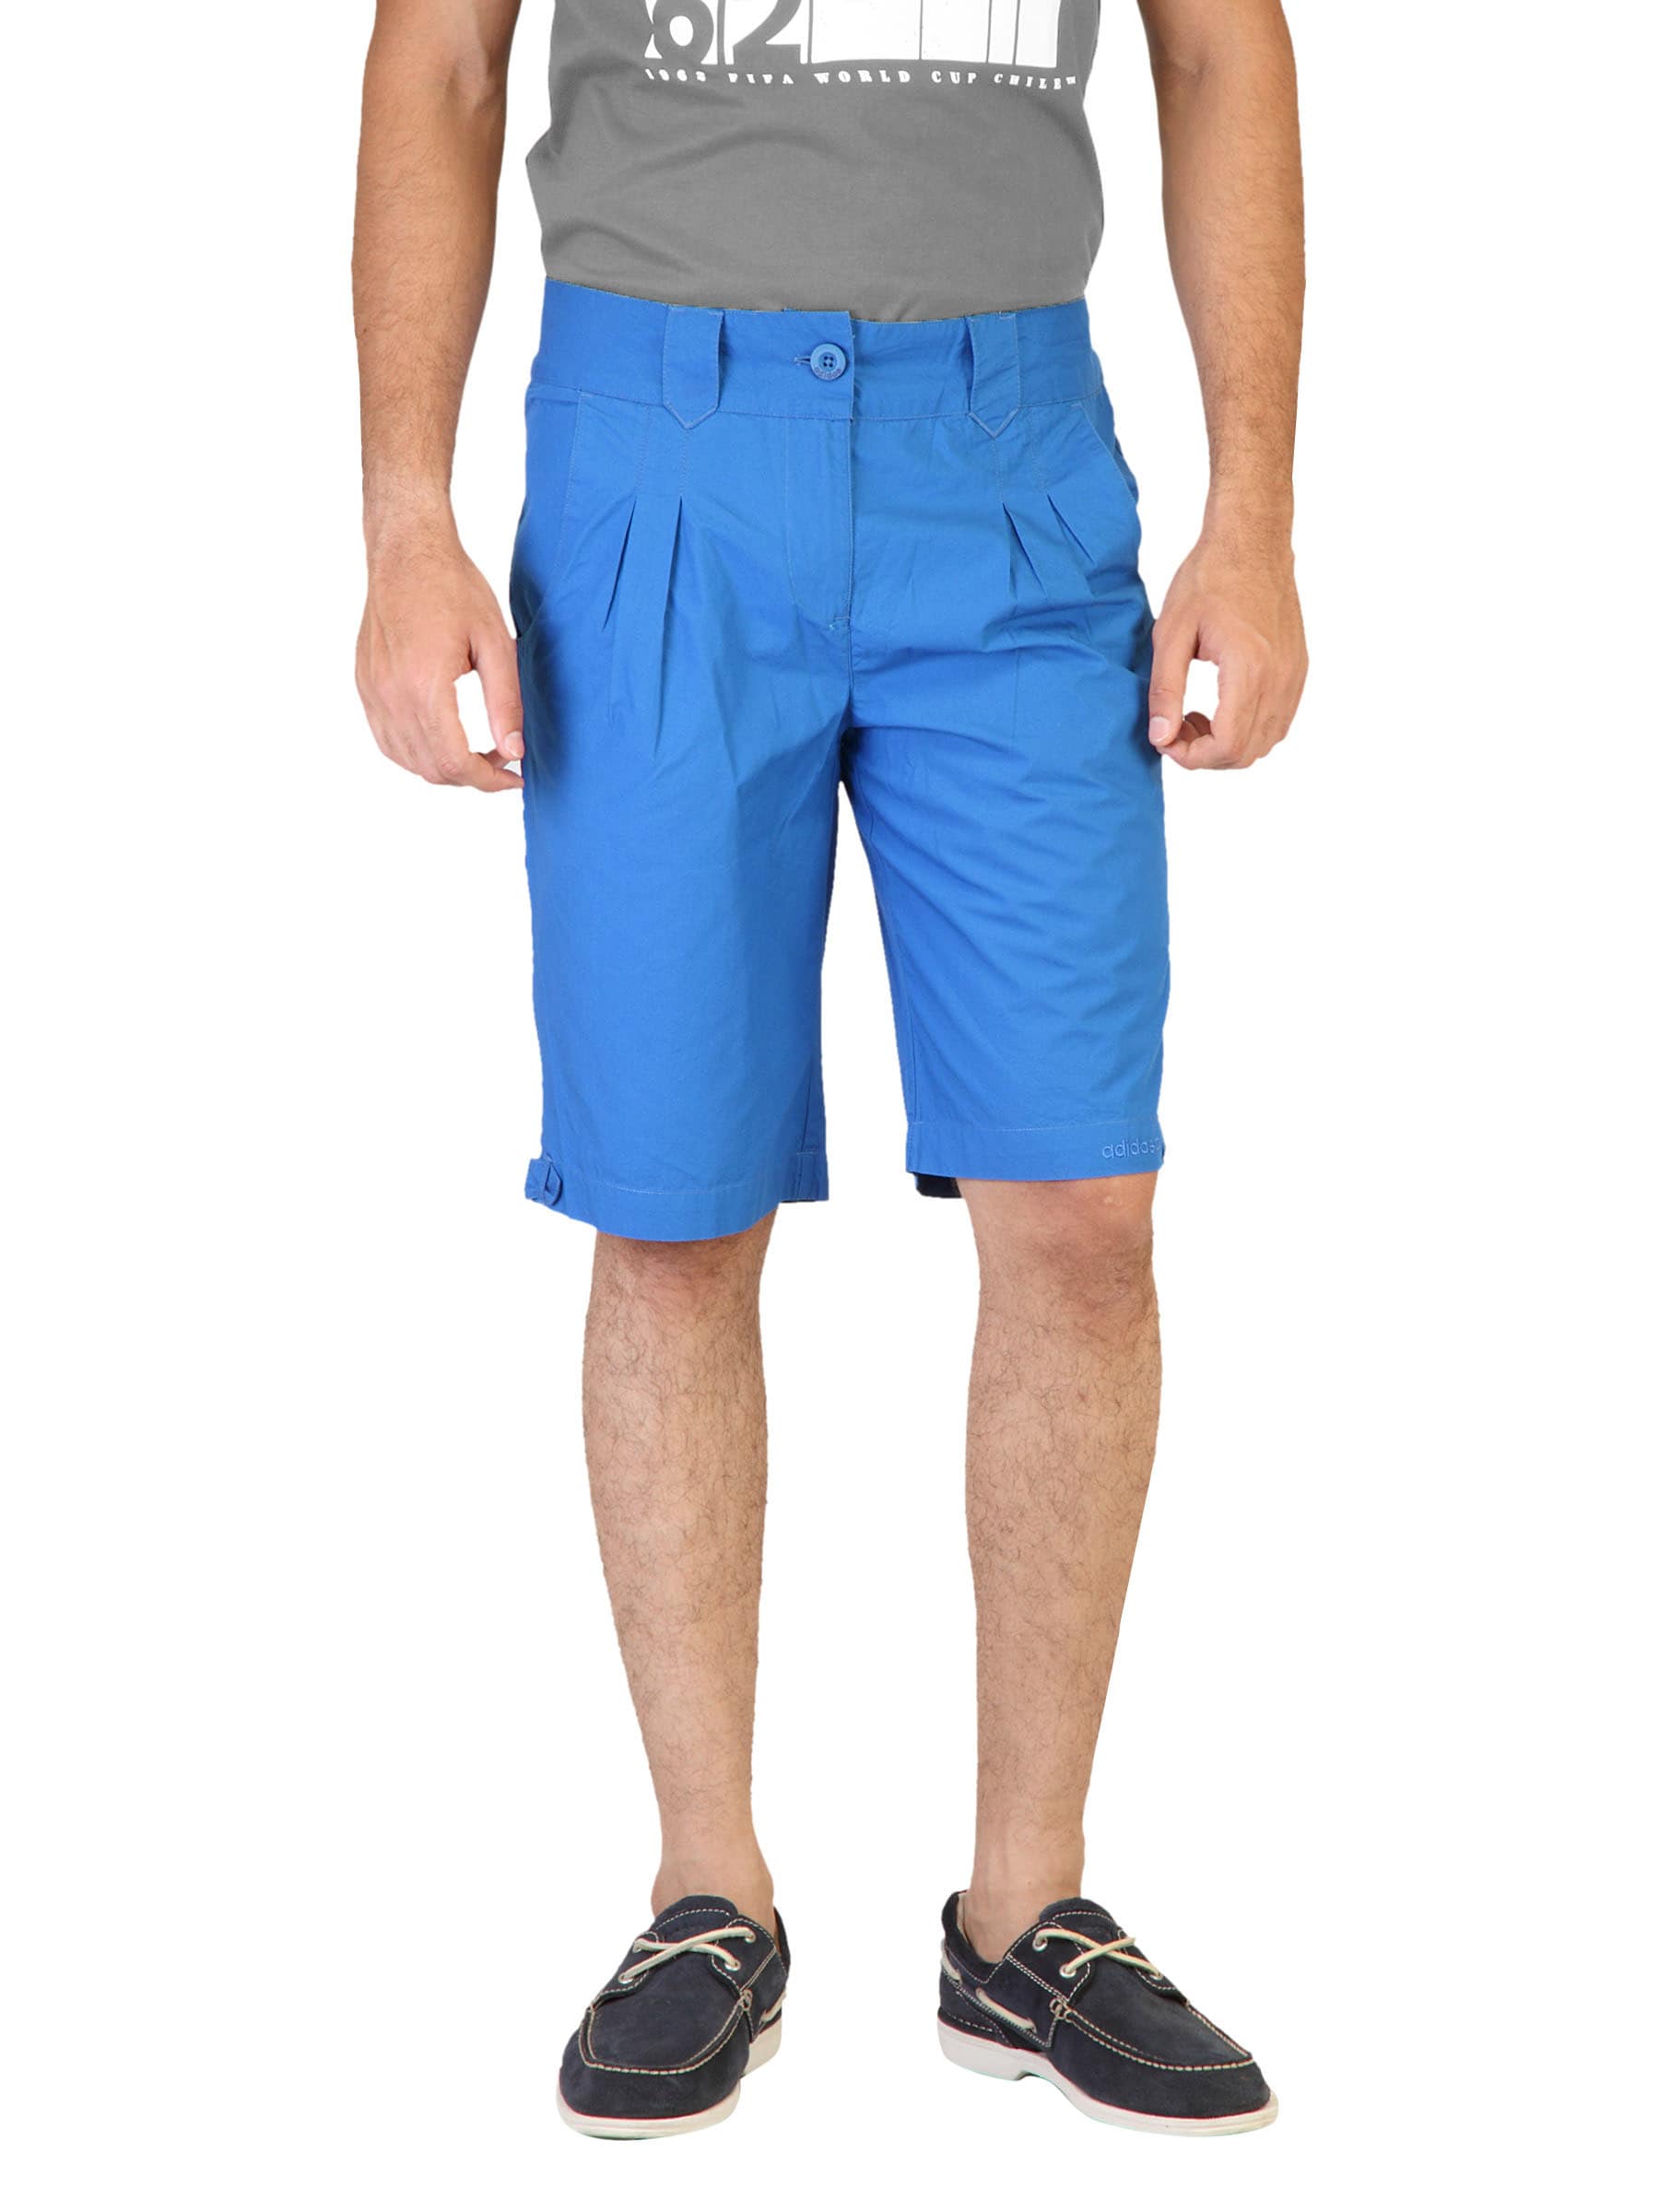 ADIDAS Men Solid Blue Shorts